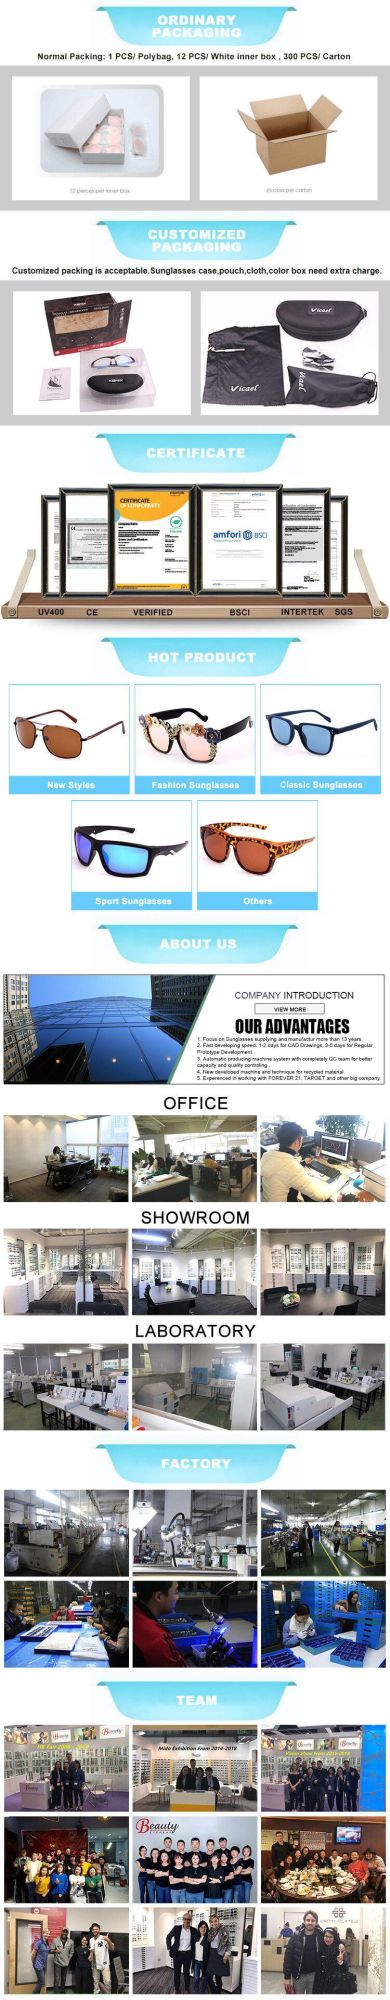 2020 Hot Selling All Black UV400 Sports Sunglasses